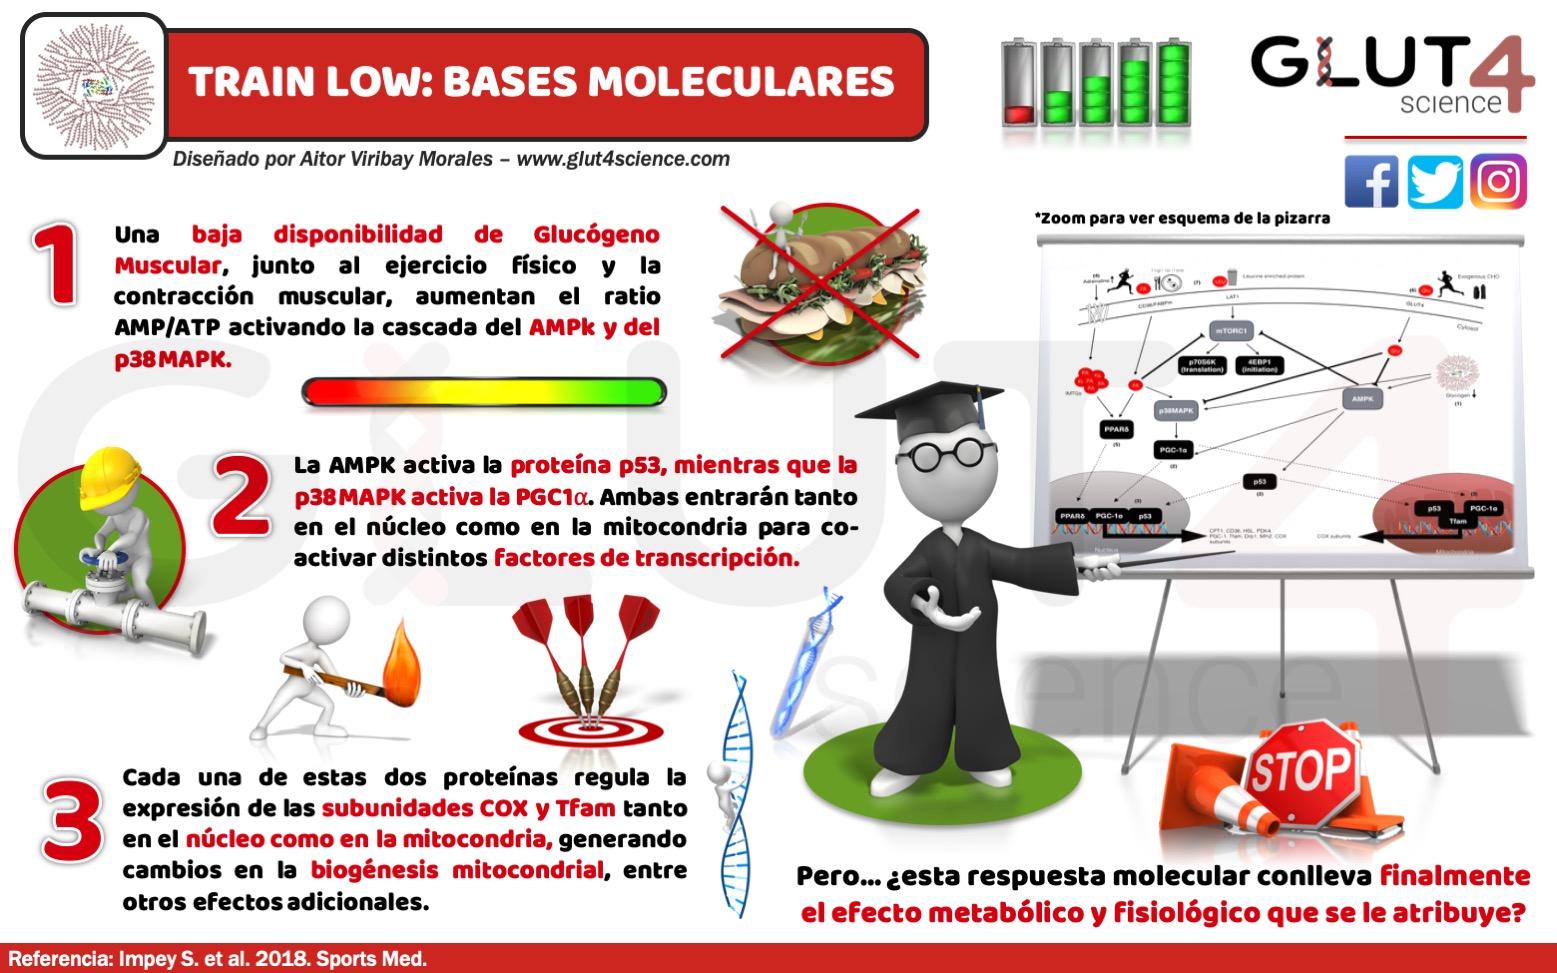 Train Low: Bases Moleculares